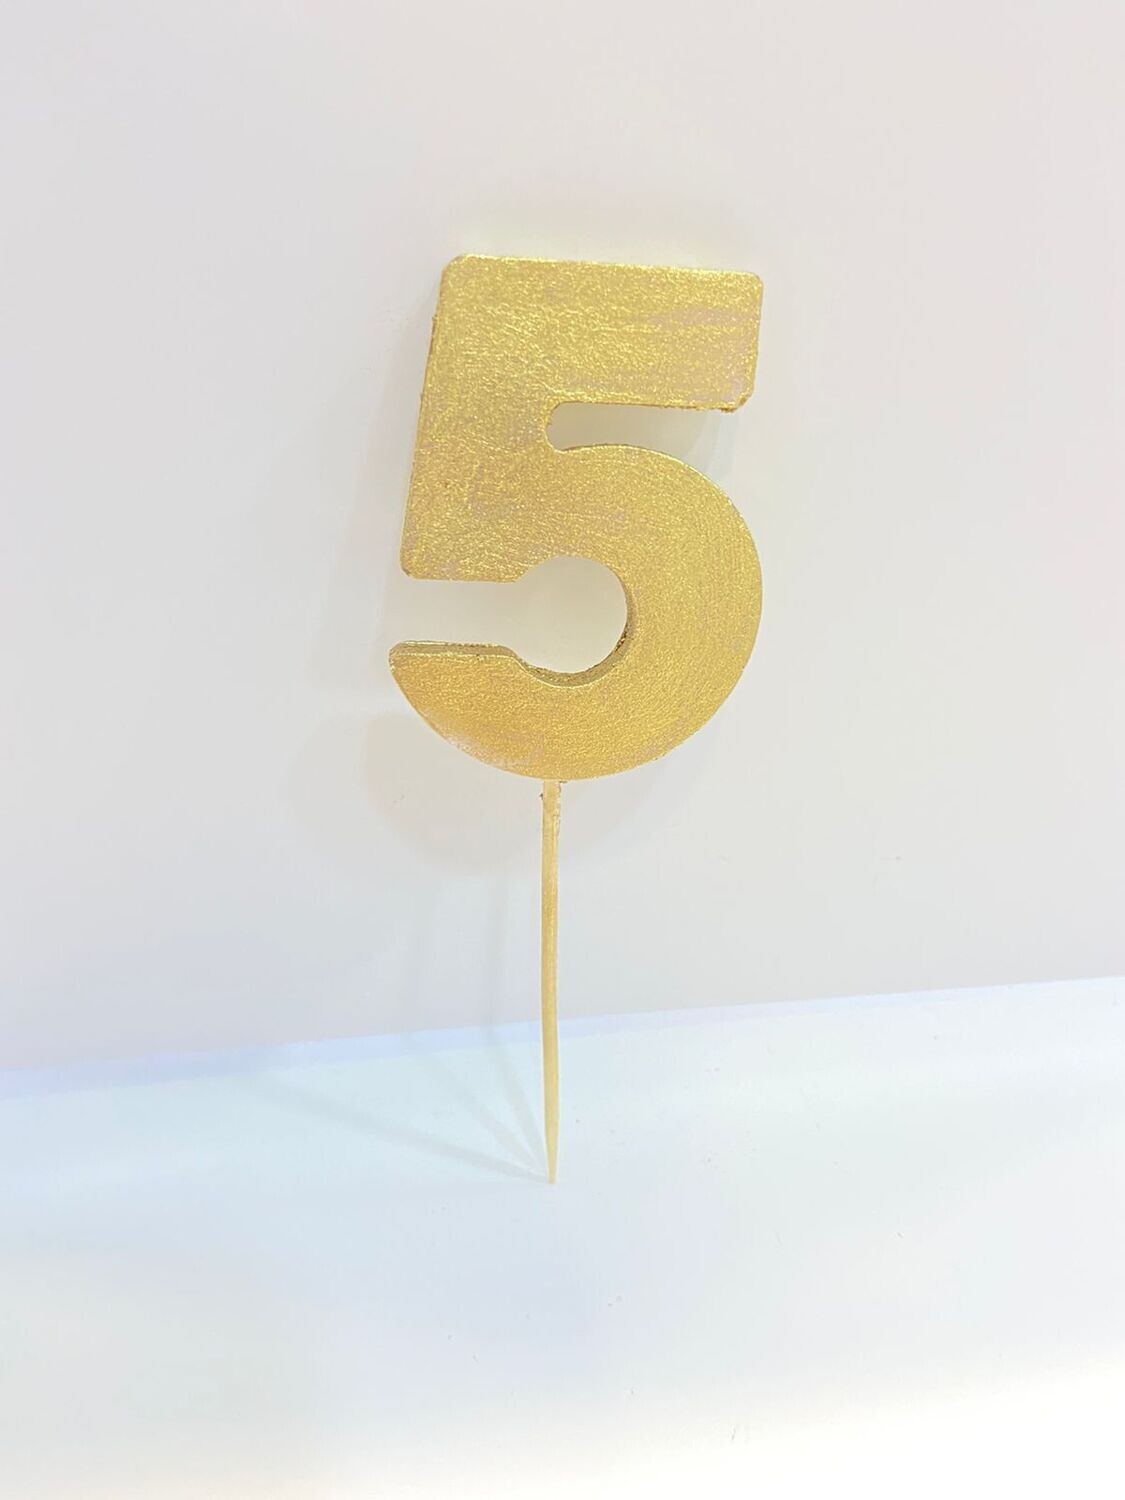 Цифра "5" АНТИЧНАЯ (золотая) на шпажке, из шоколадной глазури